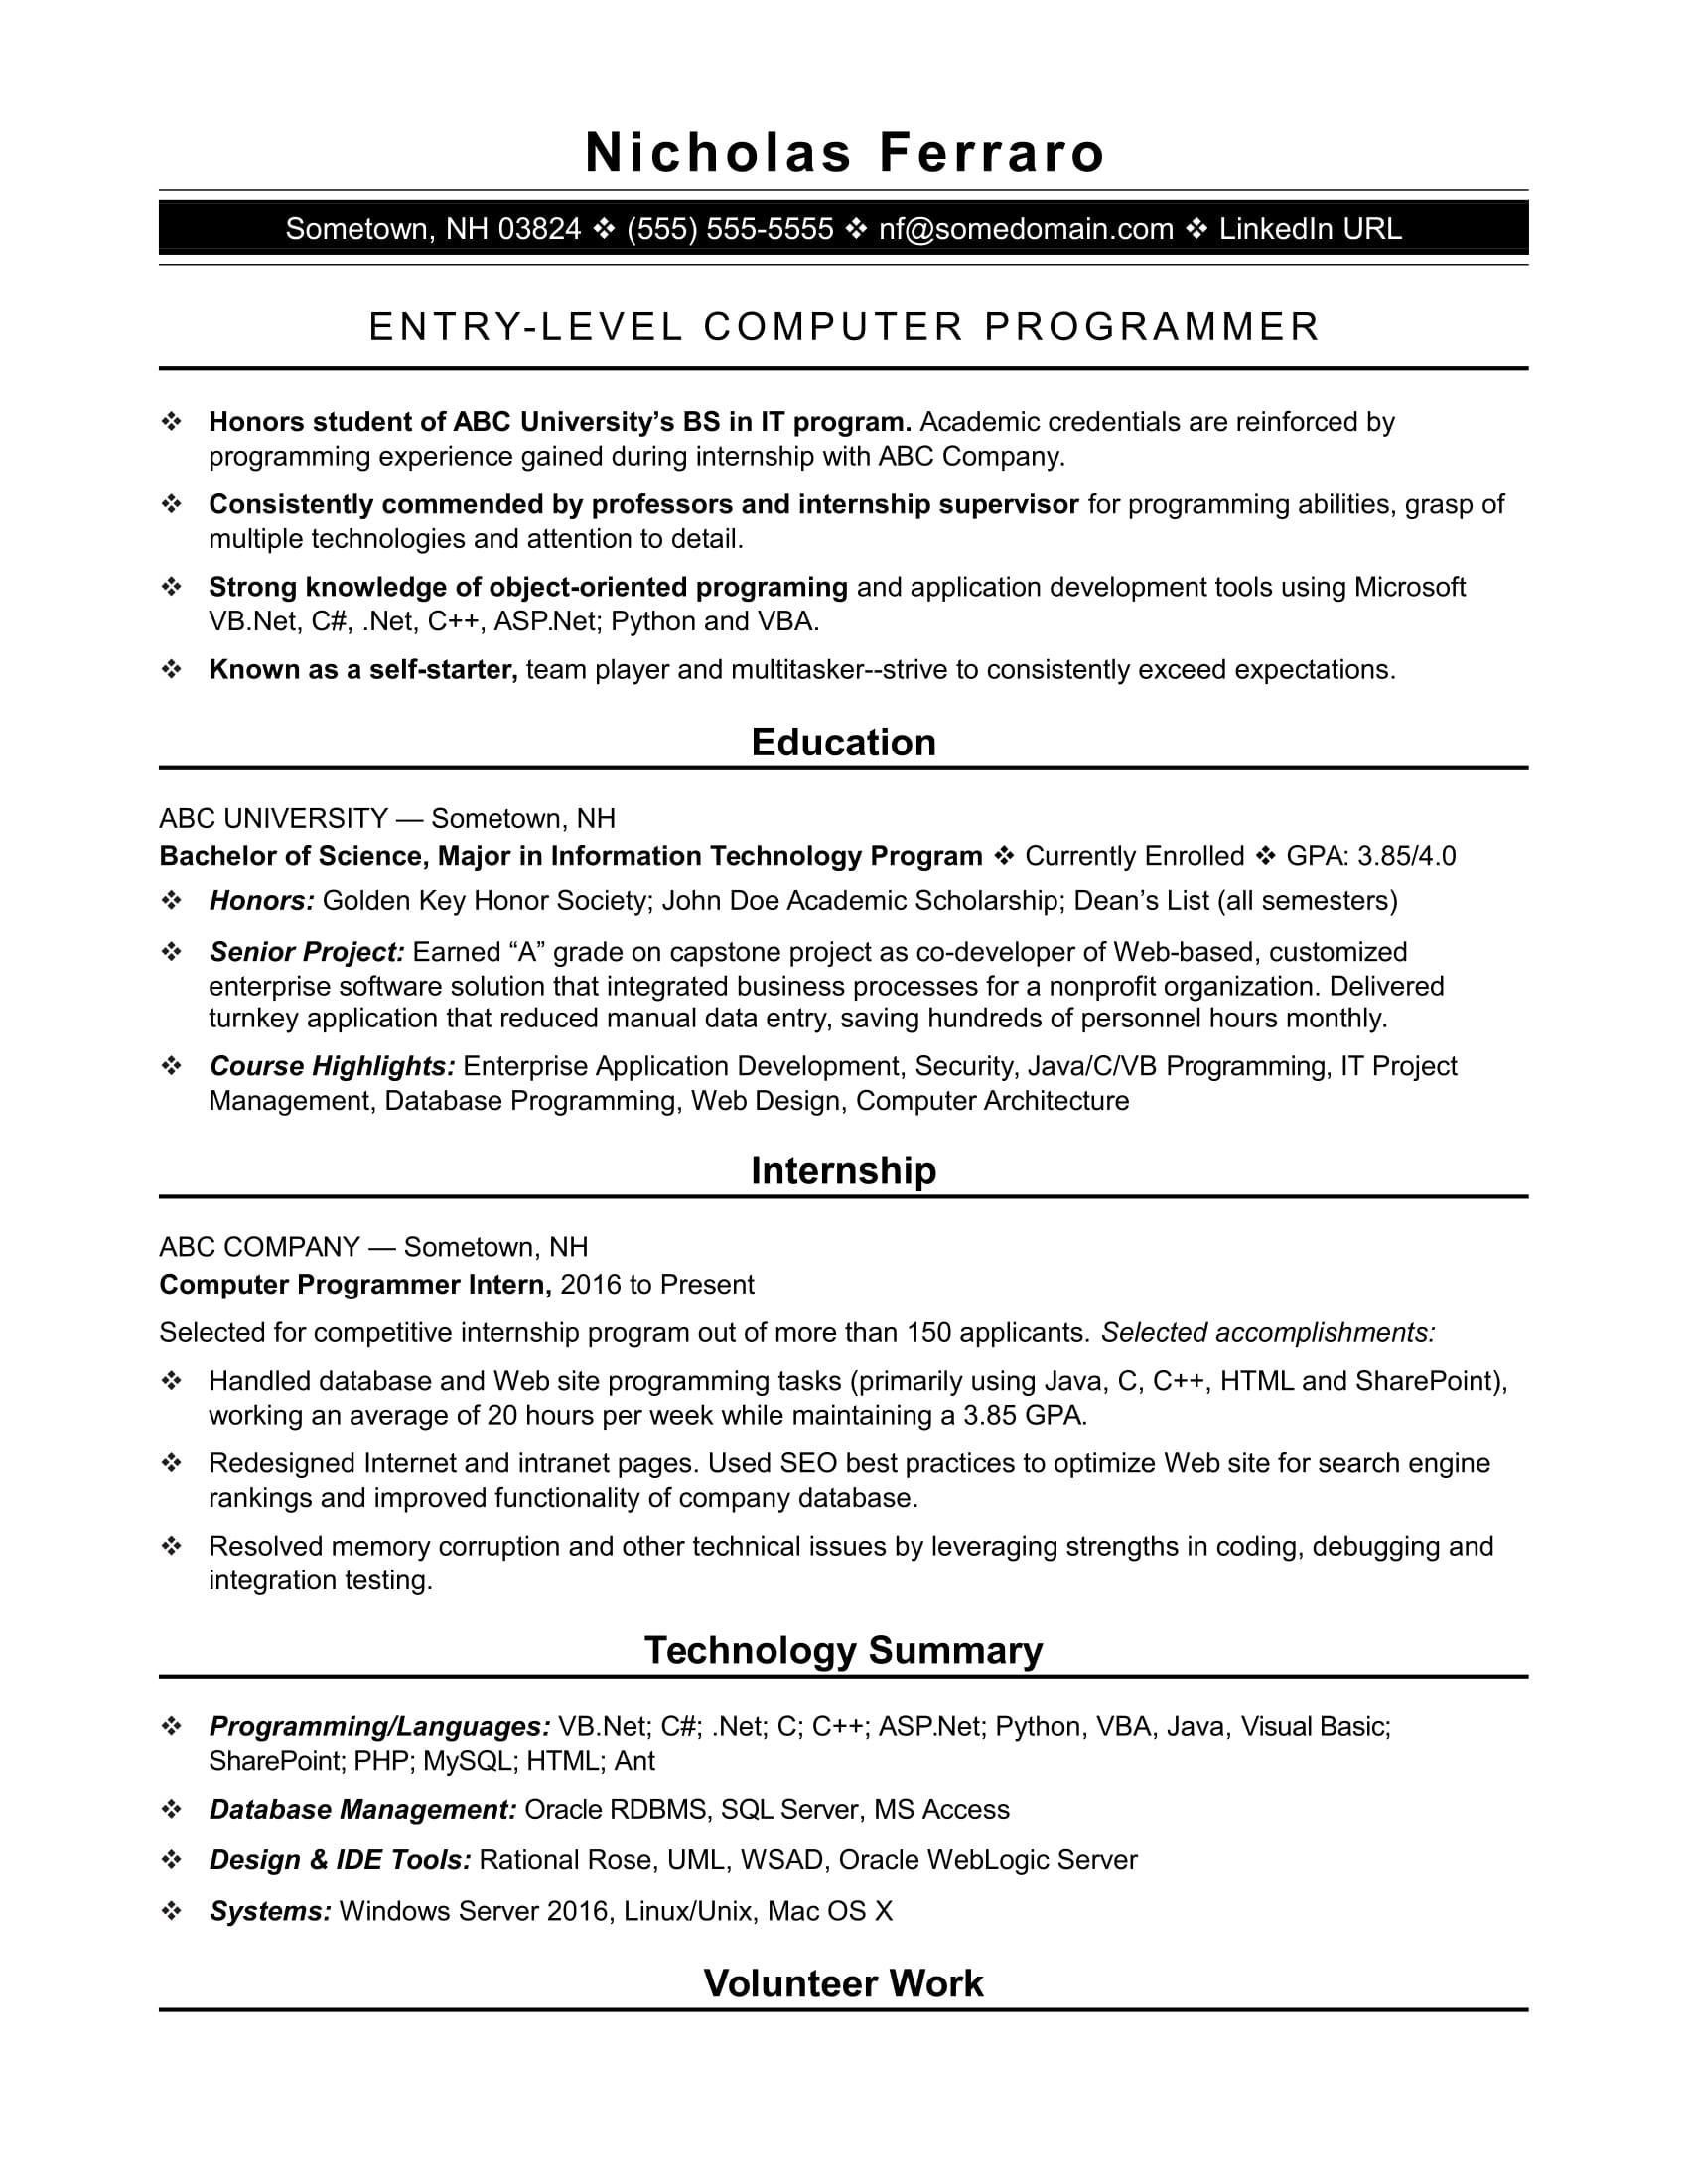 computer programmer entry level